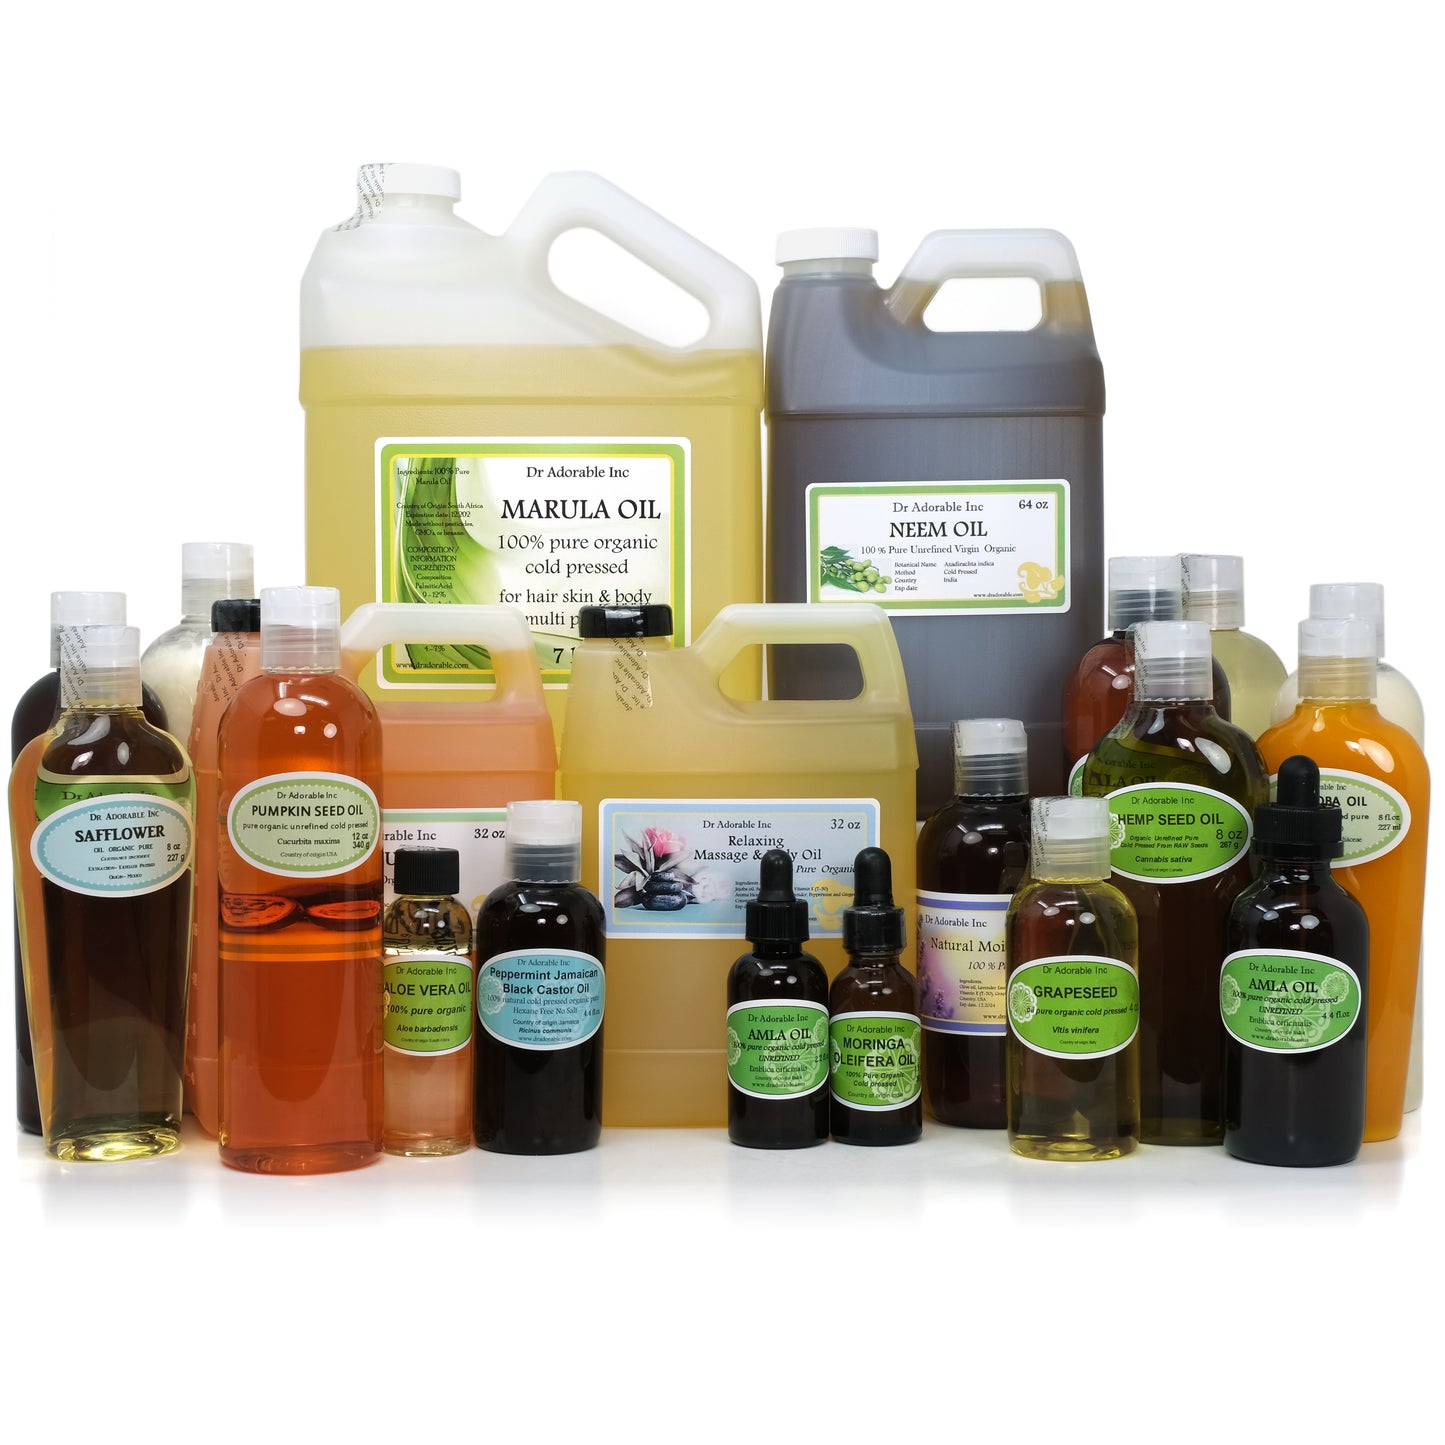 Argan Marrakesh Oil Unrefined - 100% Pure Natural Organic Cold Pressed